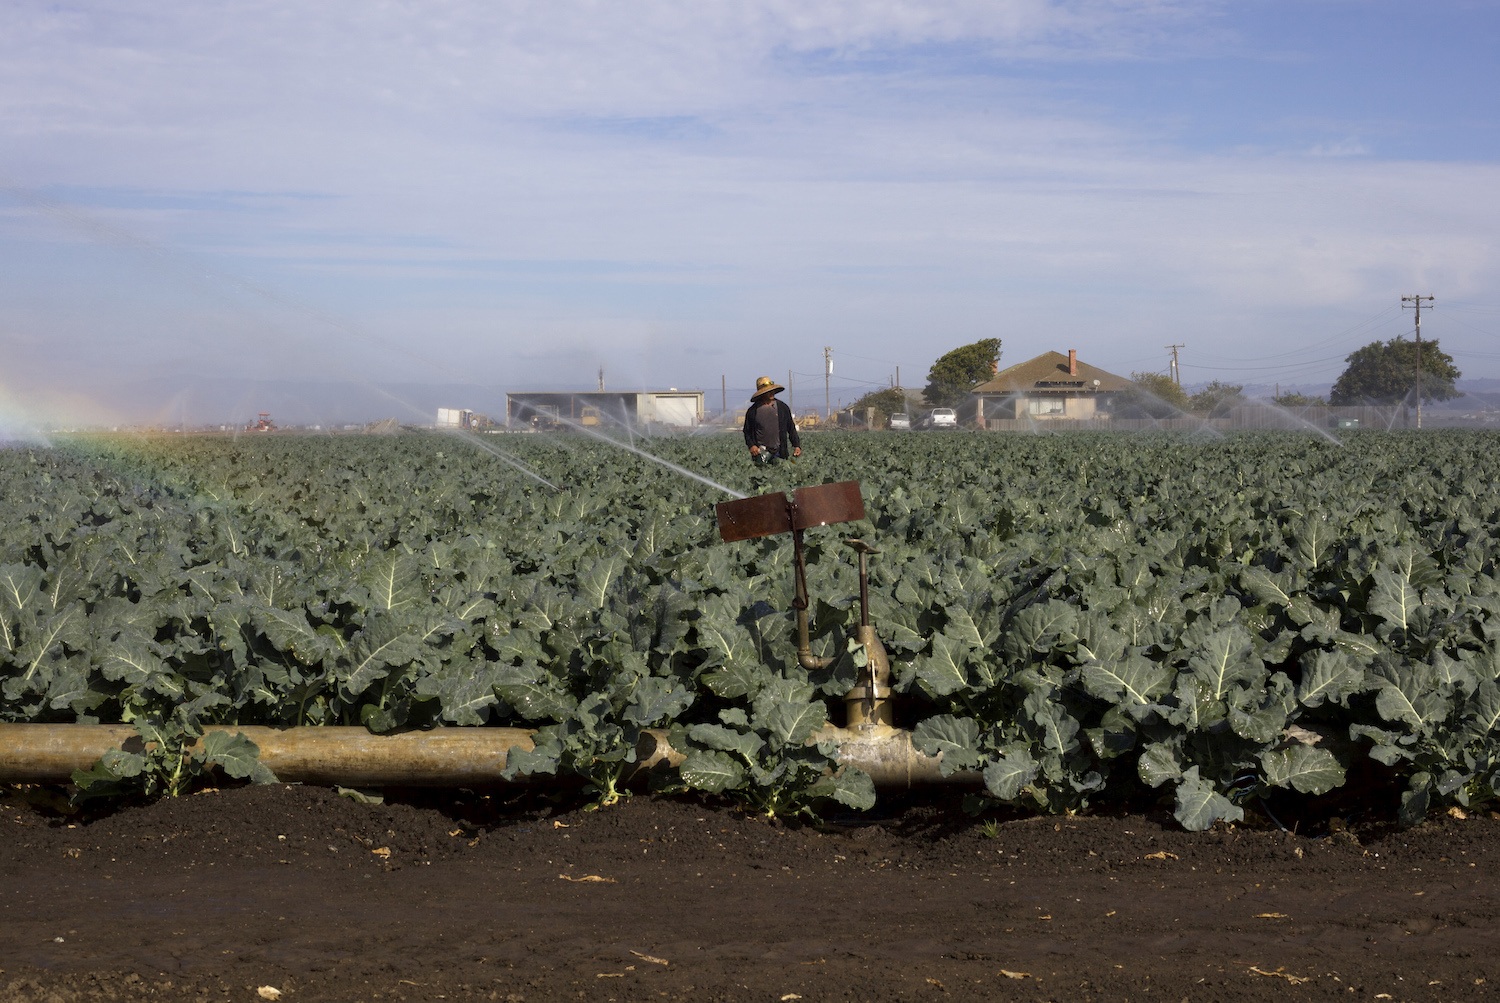 farmworker walks through broccoli field